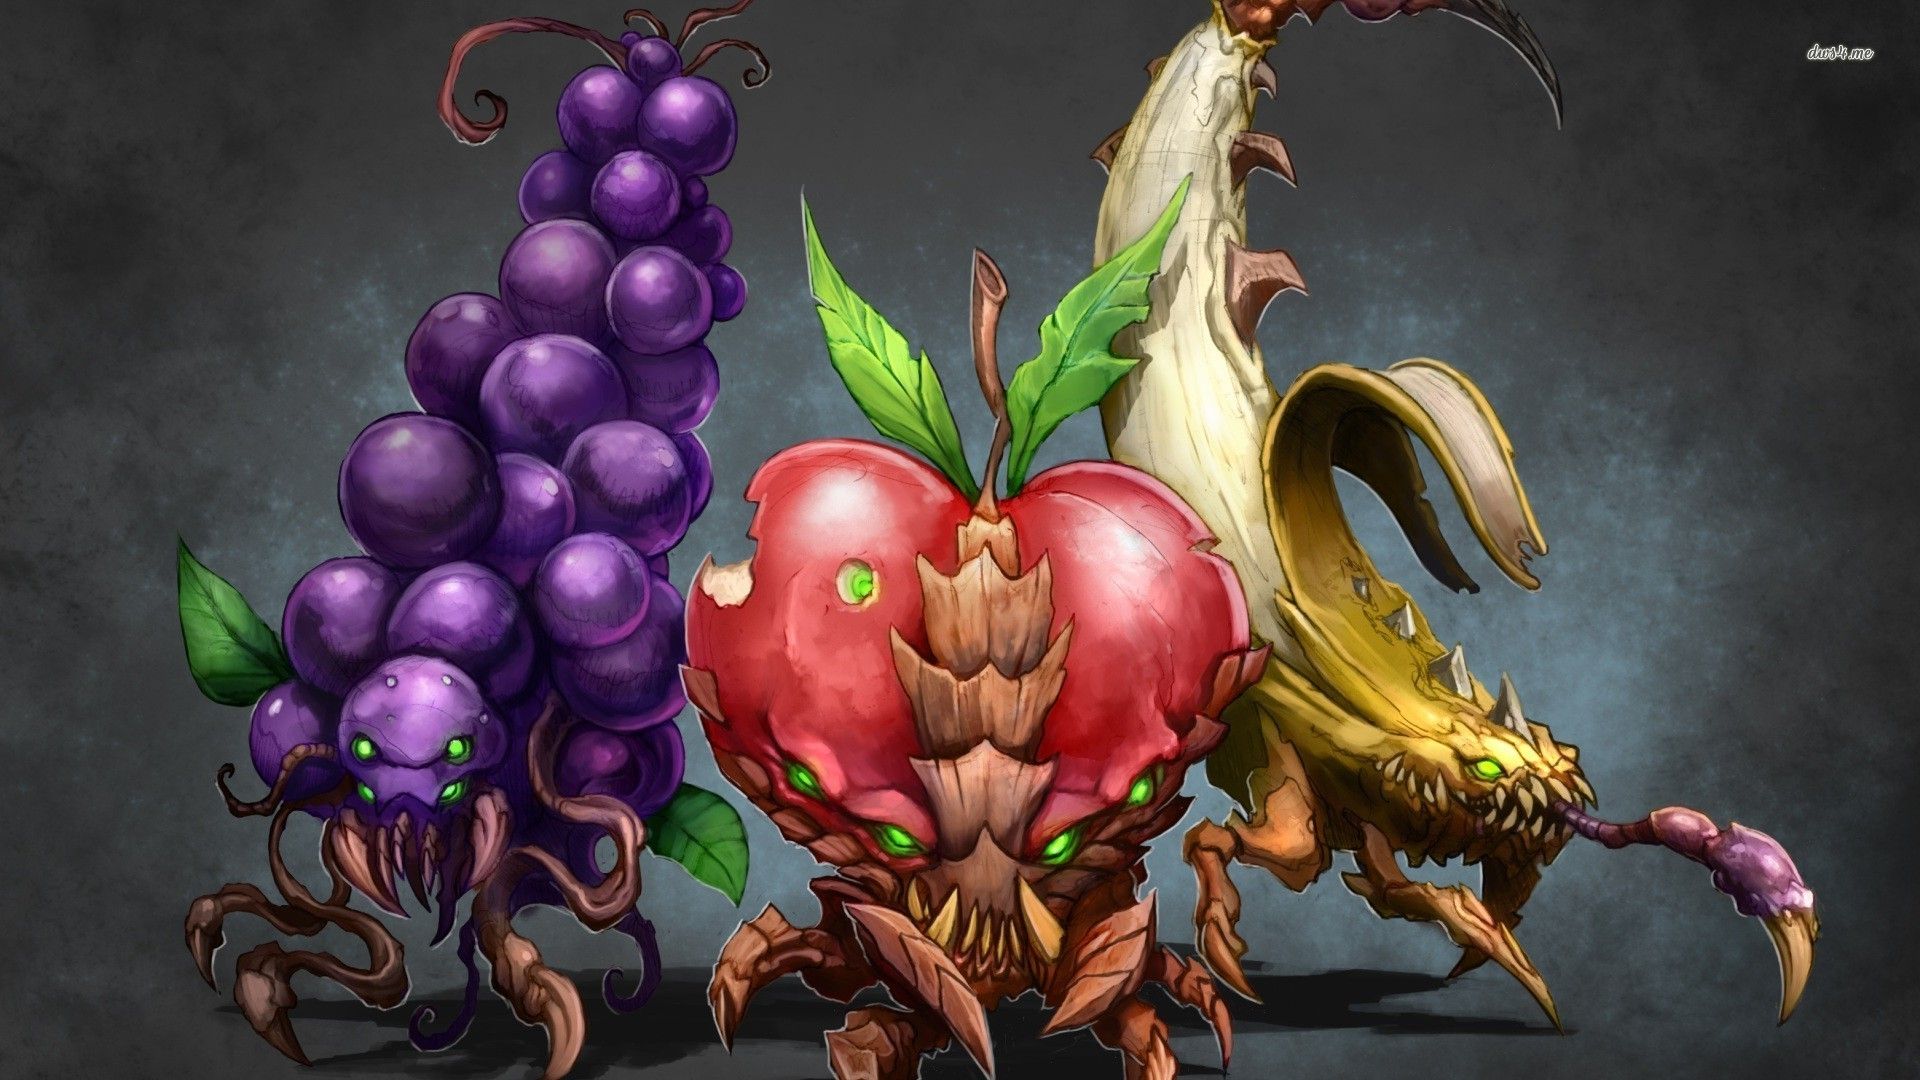 Fruit monsters wallpaper - Digital Art wallpapers -